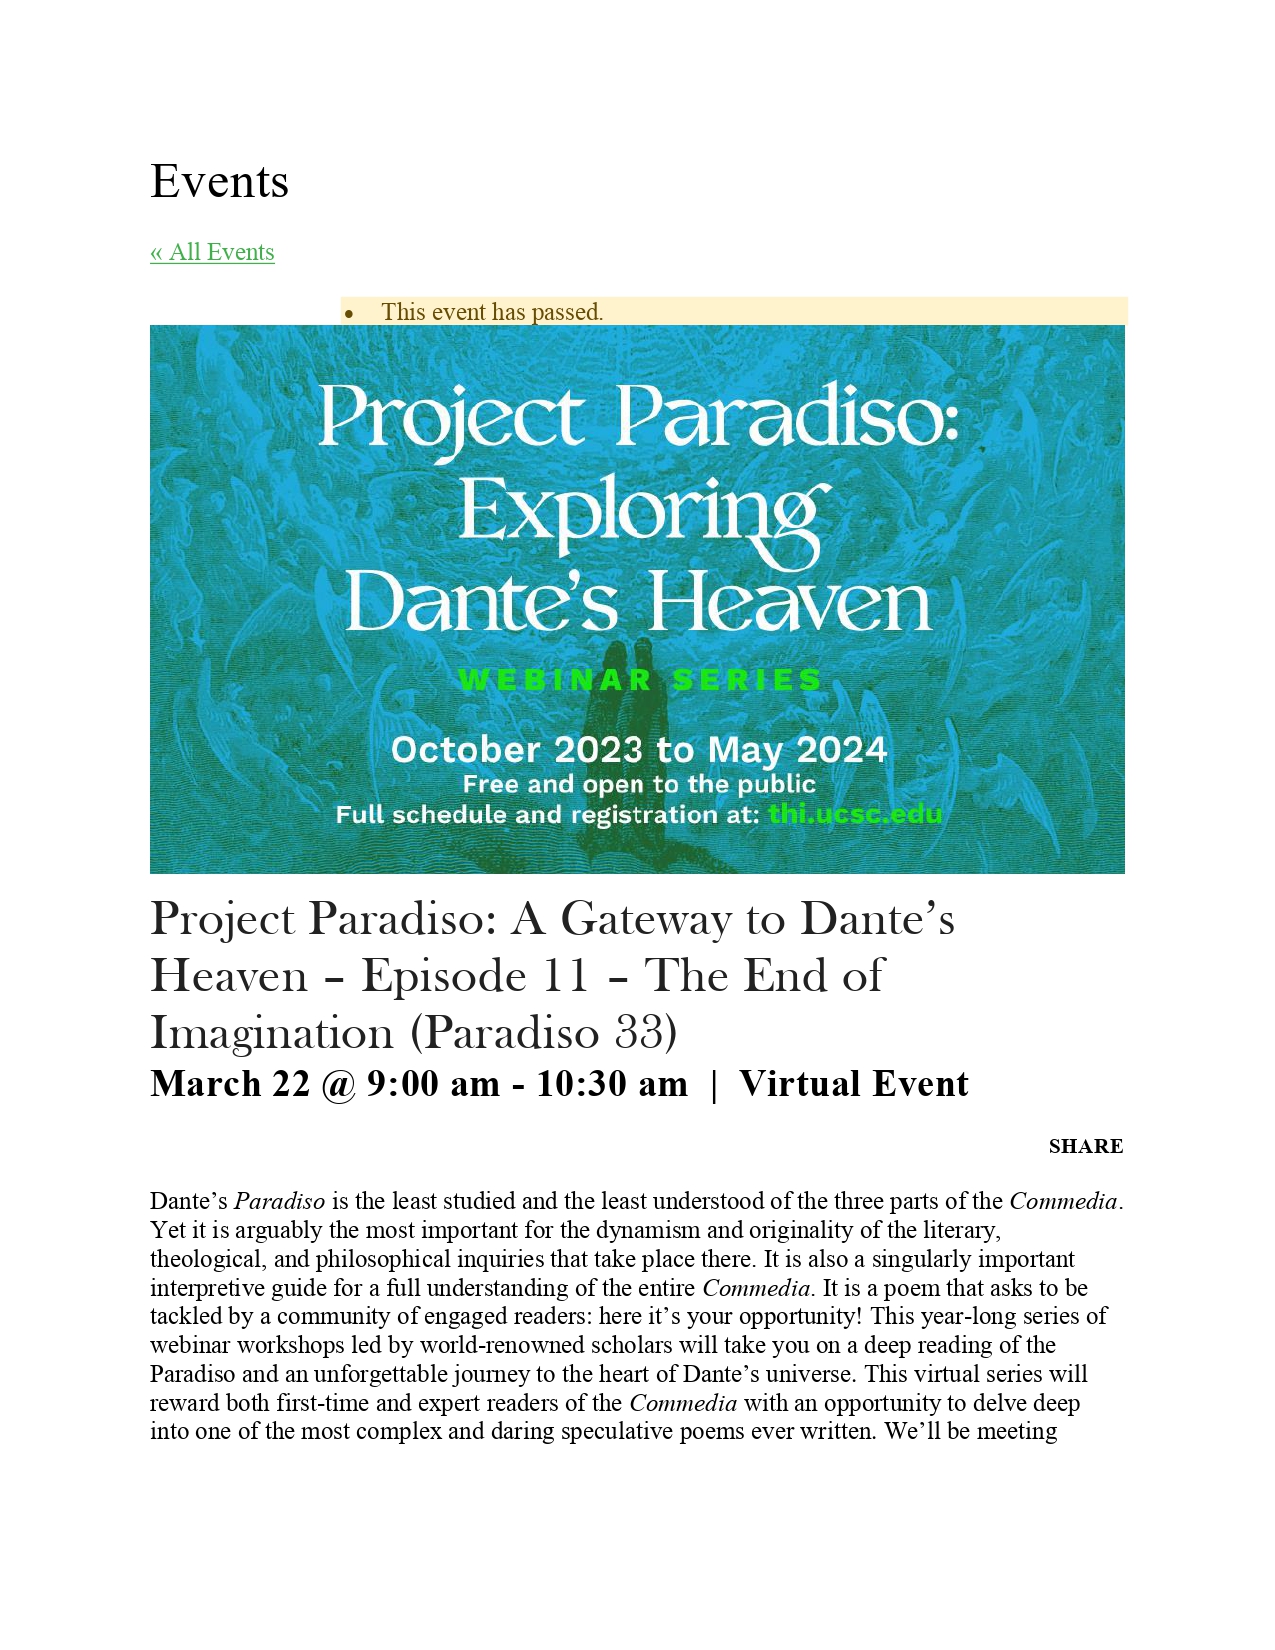 Paradiso Project Santa Cruz webpage_page-0001